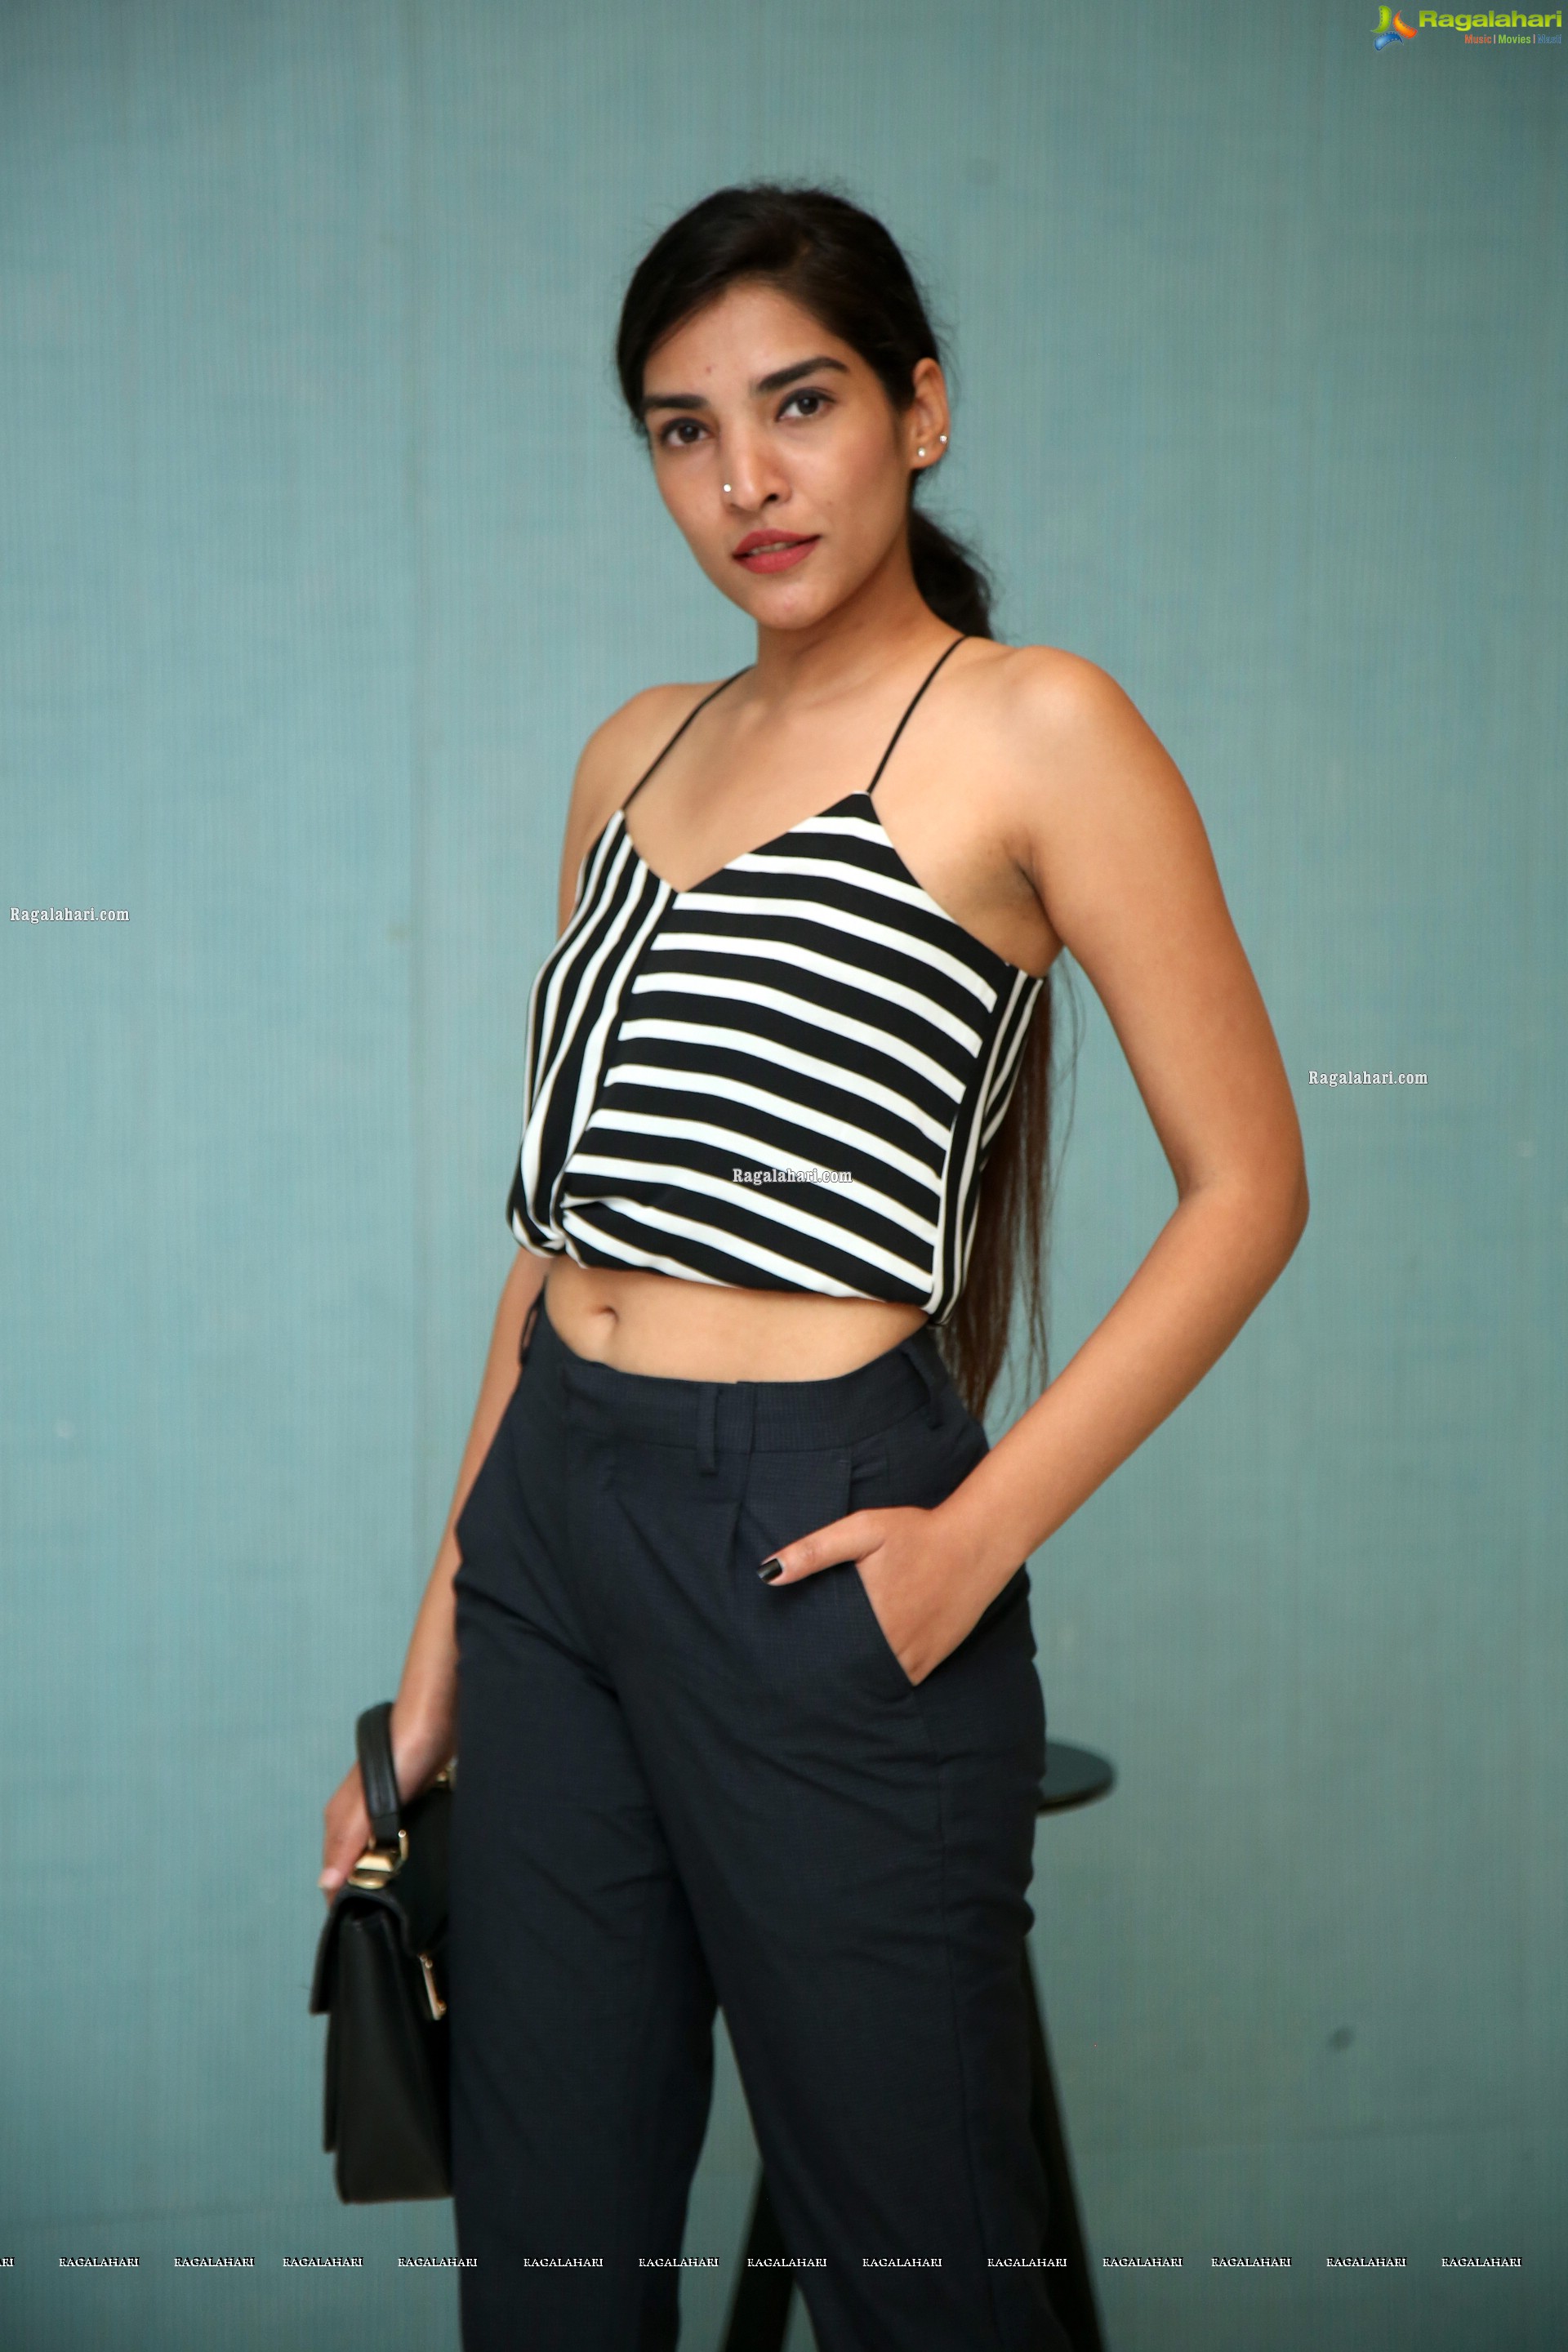 Supraja Narayan in Black and White Stripes Crop Top, HD Photo Gallery